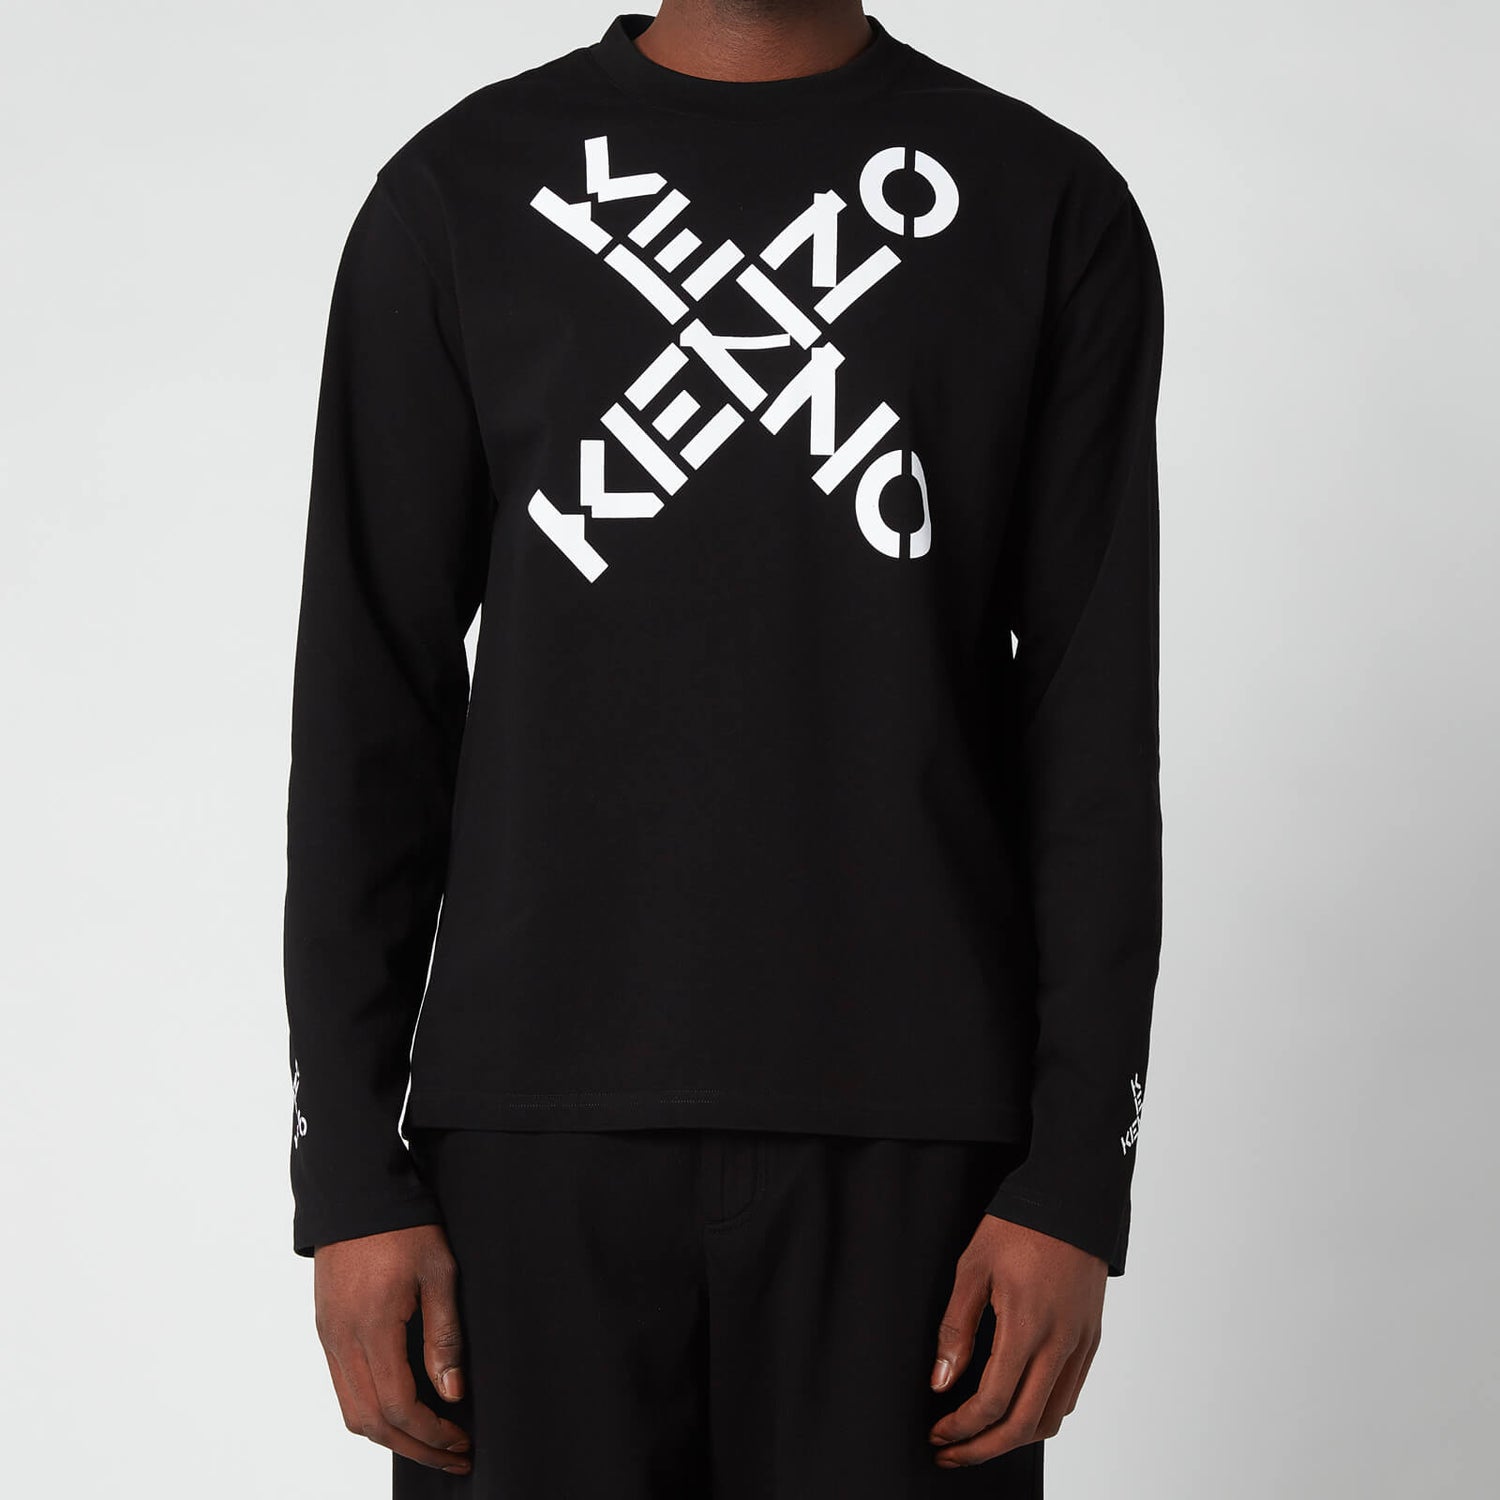 KENZO Men's Sport Long Sleeve T-Shirt - Black - S